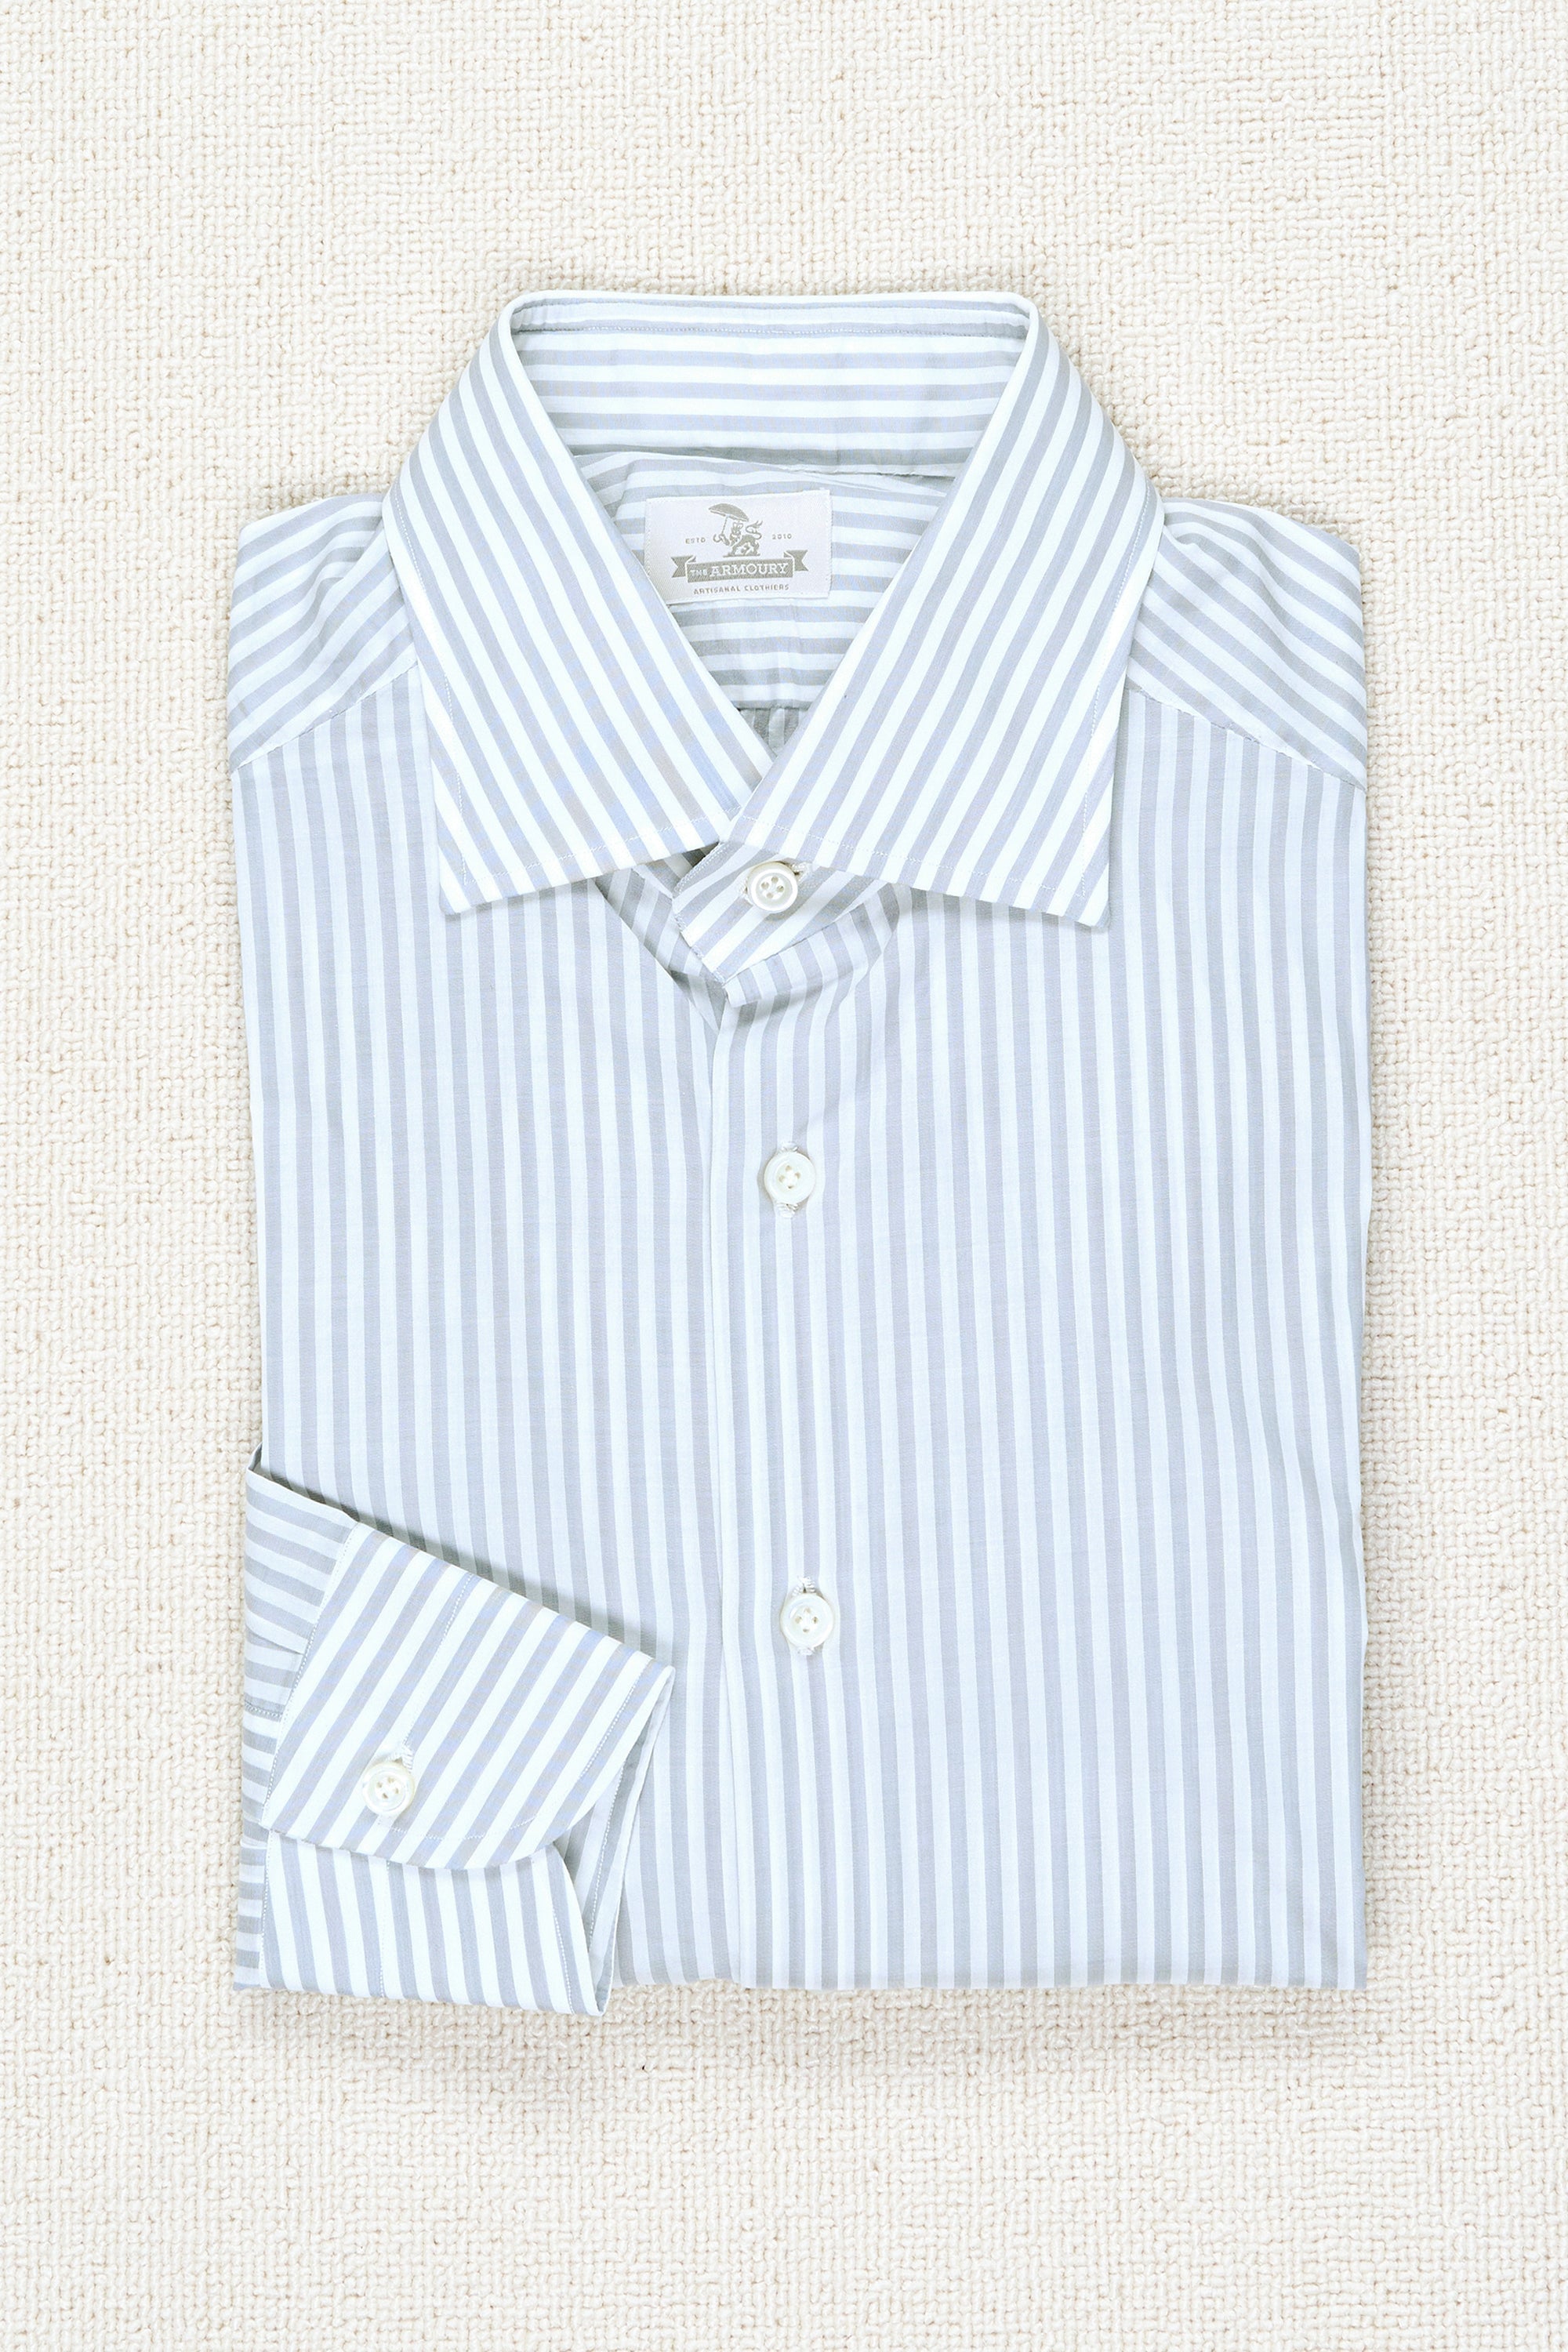 The Armoury Exclusive Carlo Riva White/Grey Butcher Stripe Cotton Spread Collar Shirt *sample*